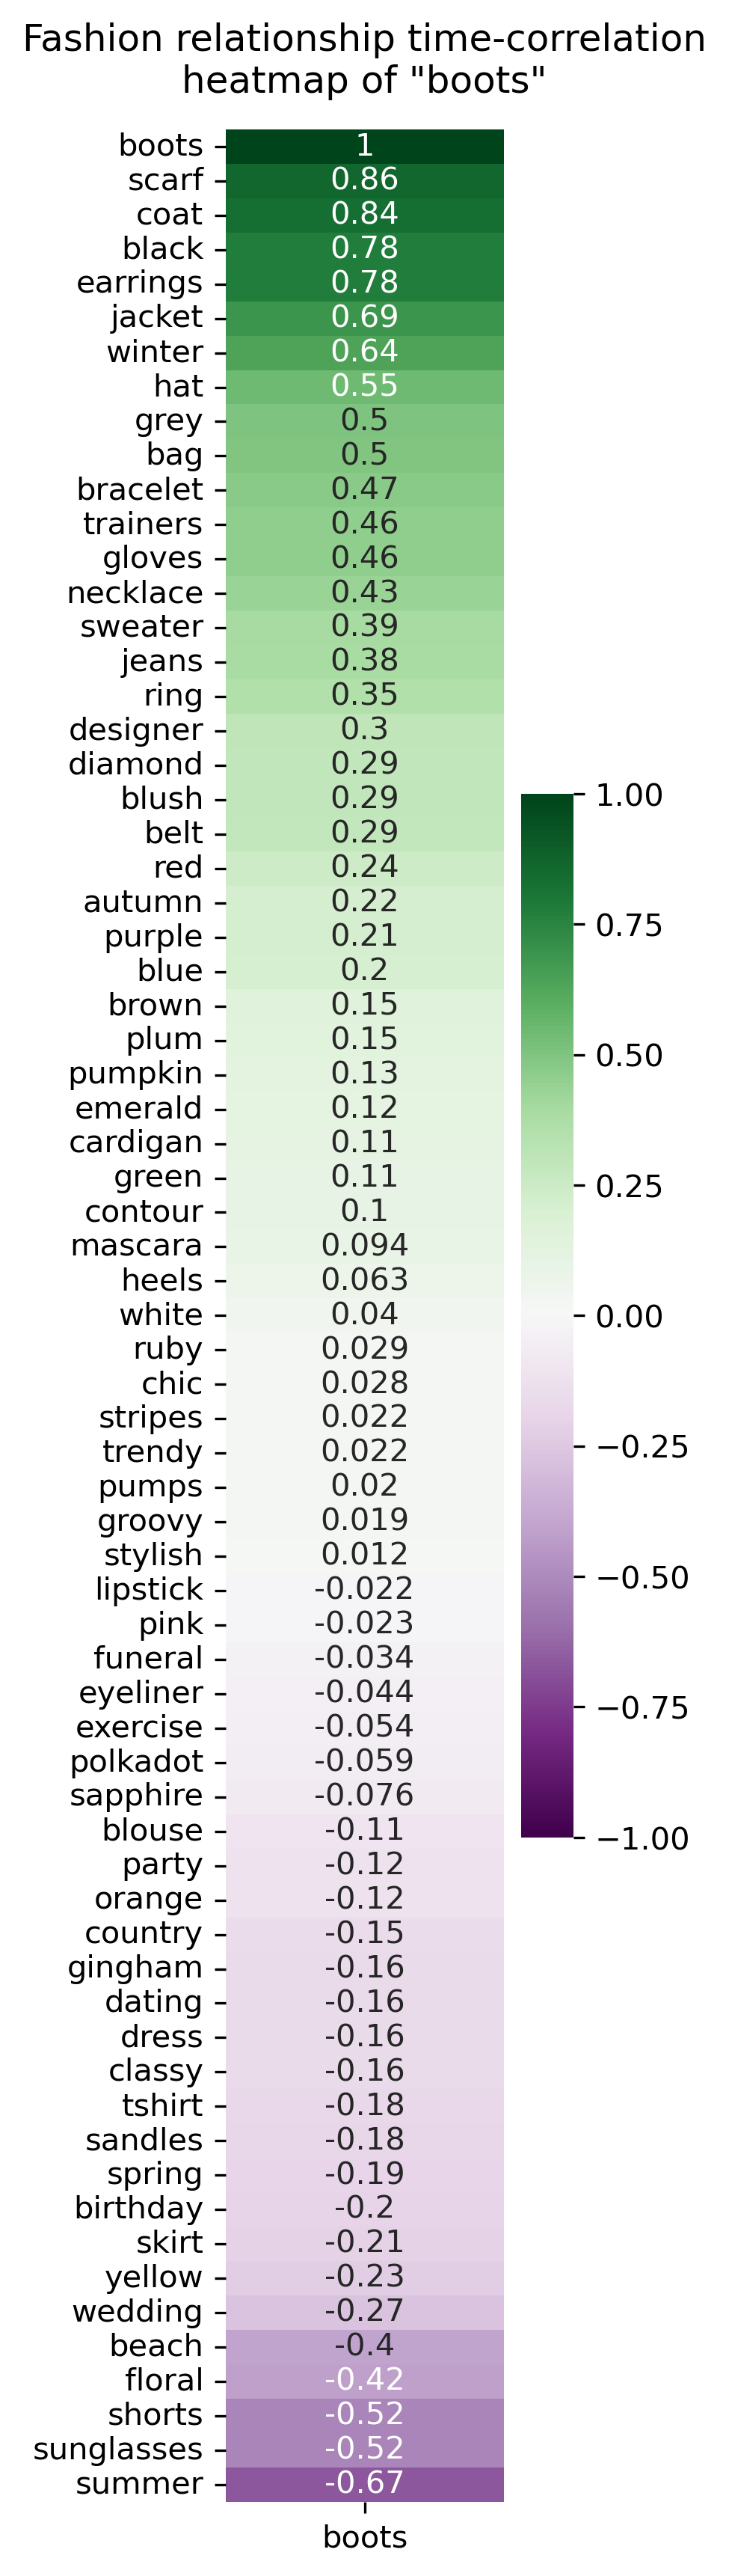 heatmap of boots correlations